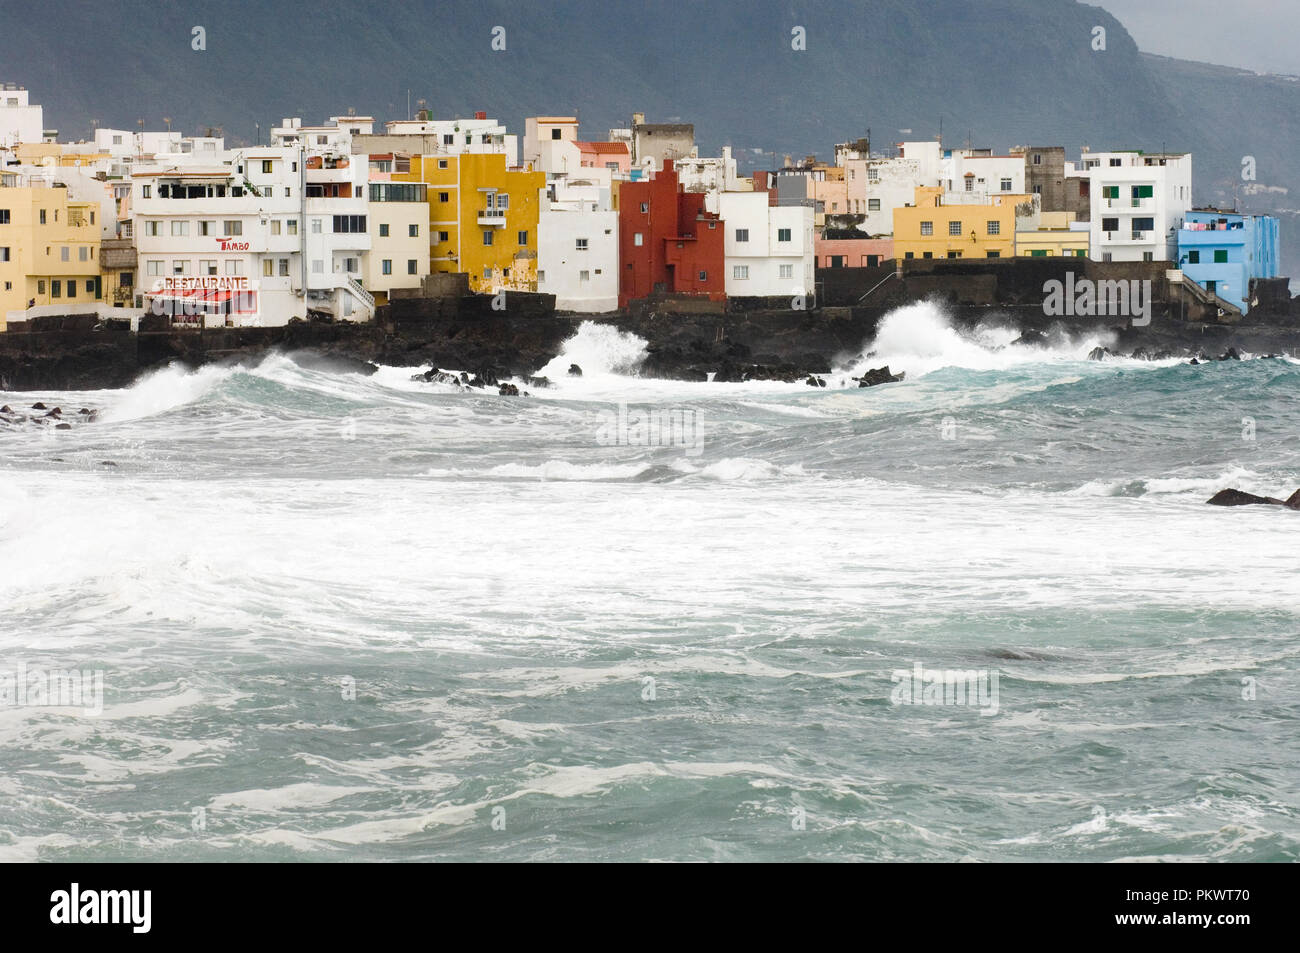 Wetter in Puerto de la Cruz, Teneriffa, Kanarische Inseln, Spanien. März  2006 Stockfotografie - Alamy